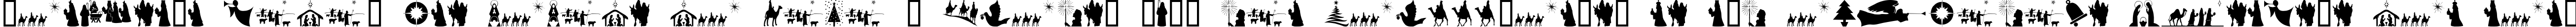 Пример написания шрифтом SL Christmas Silhouettes Normal текста на испанском